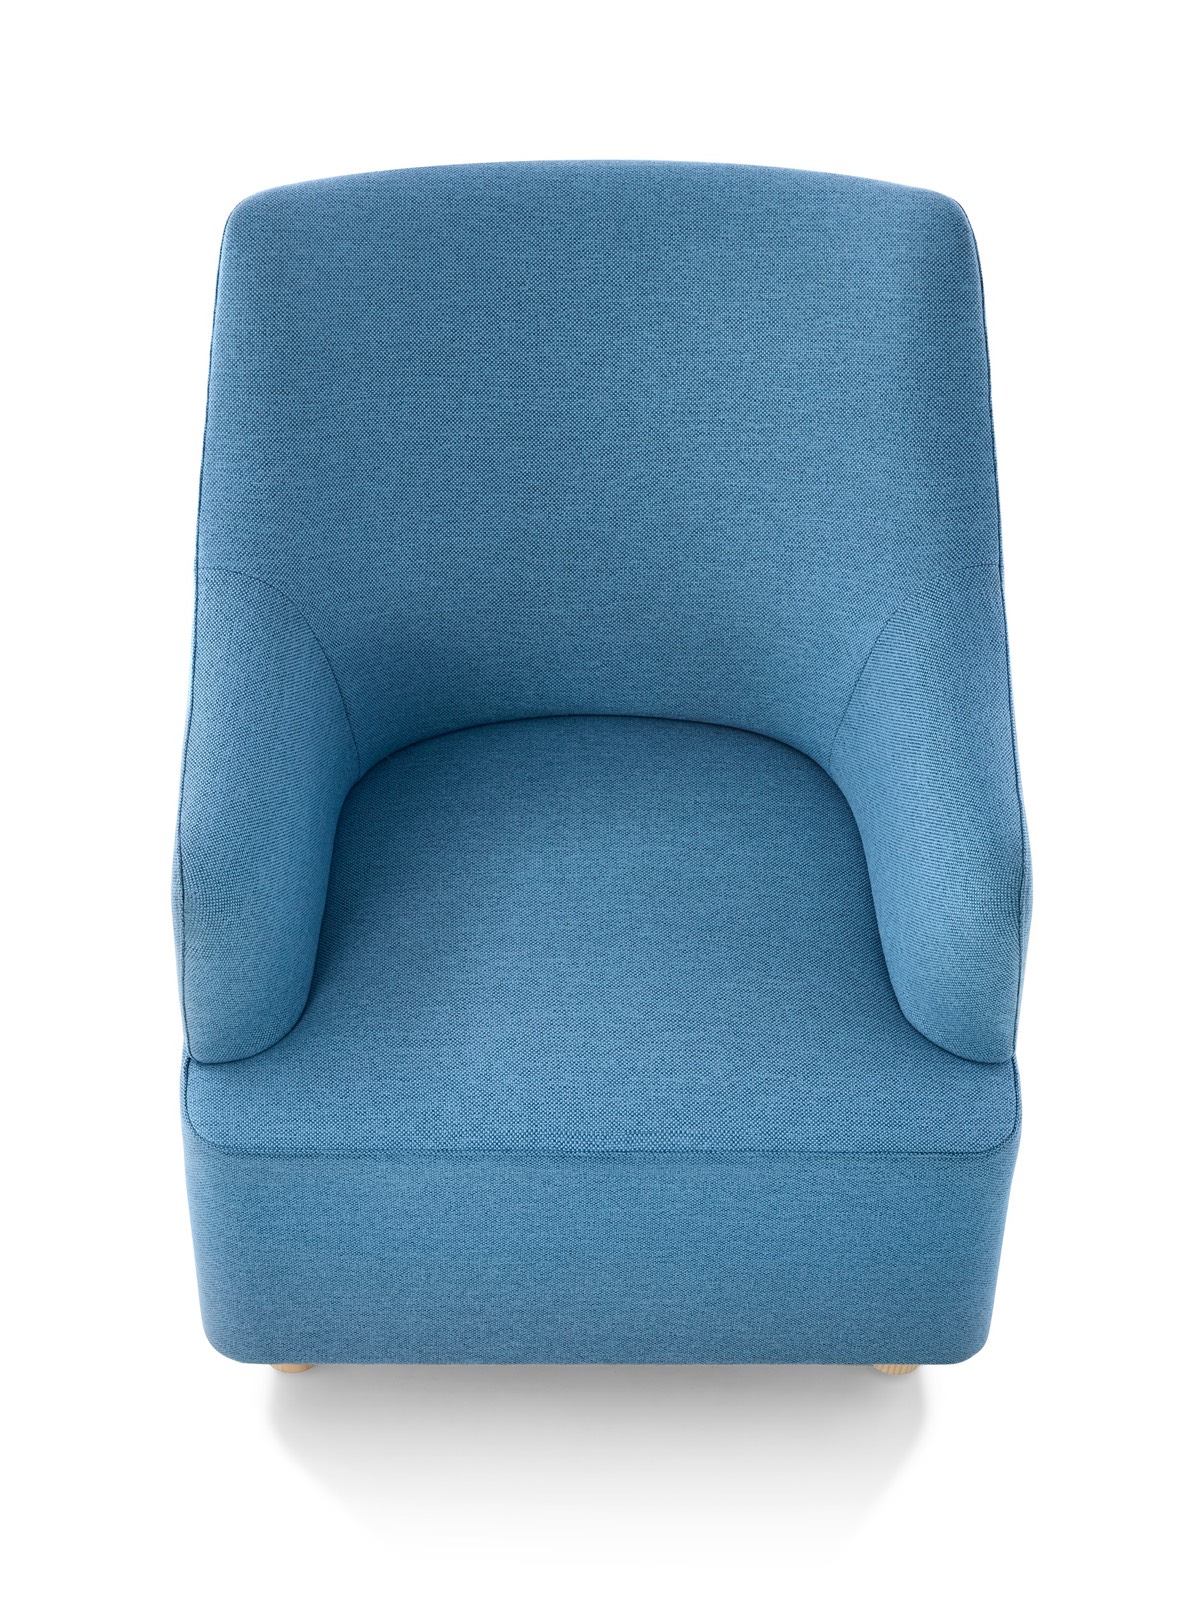 Vista superior de una silla de club Plex en azul.